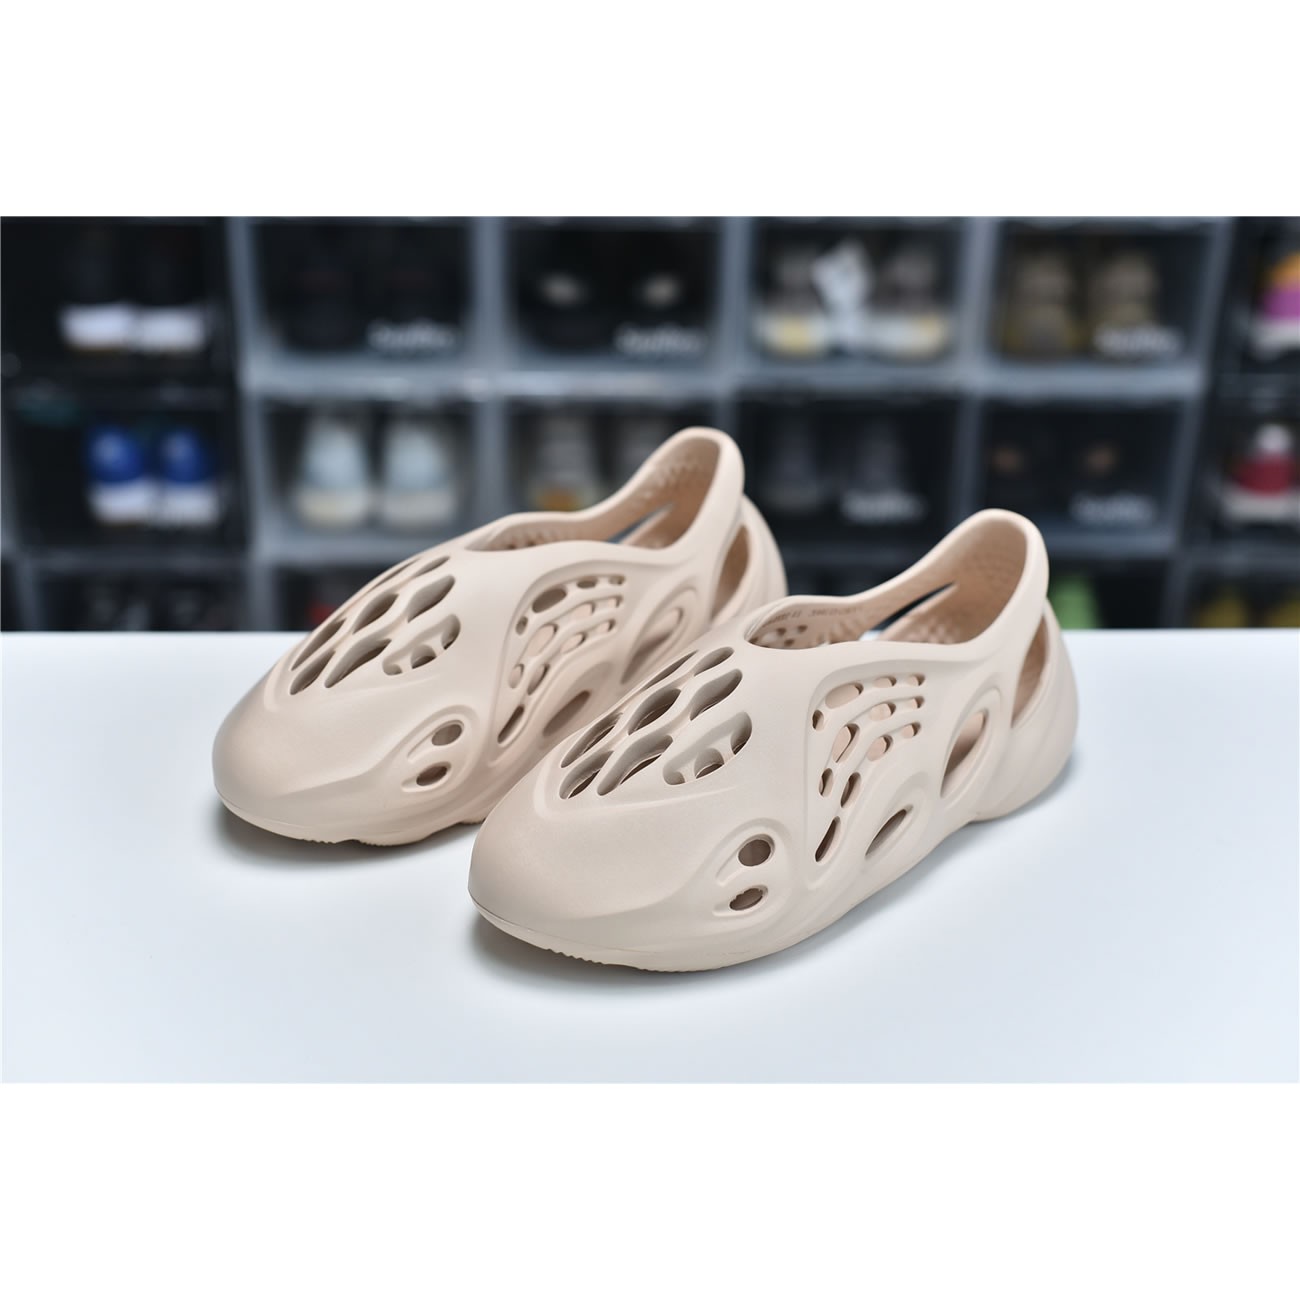 adidas Yeezy Crocs Clog Foam Runner Colors: Beige Black Orange White